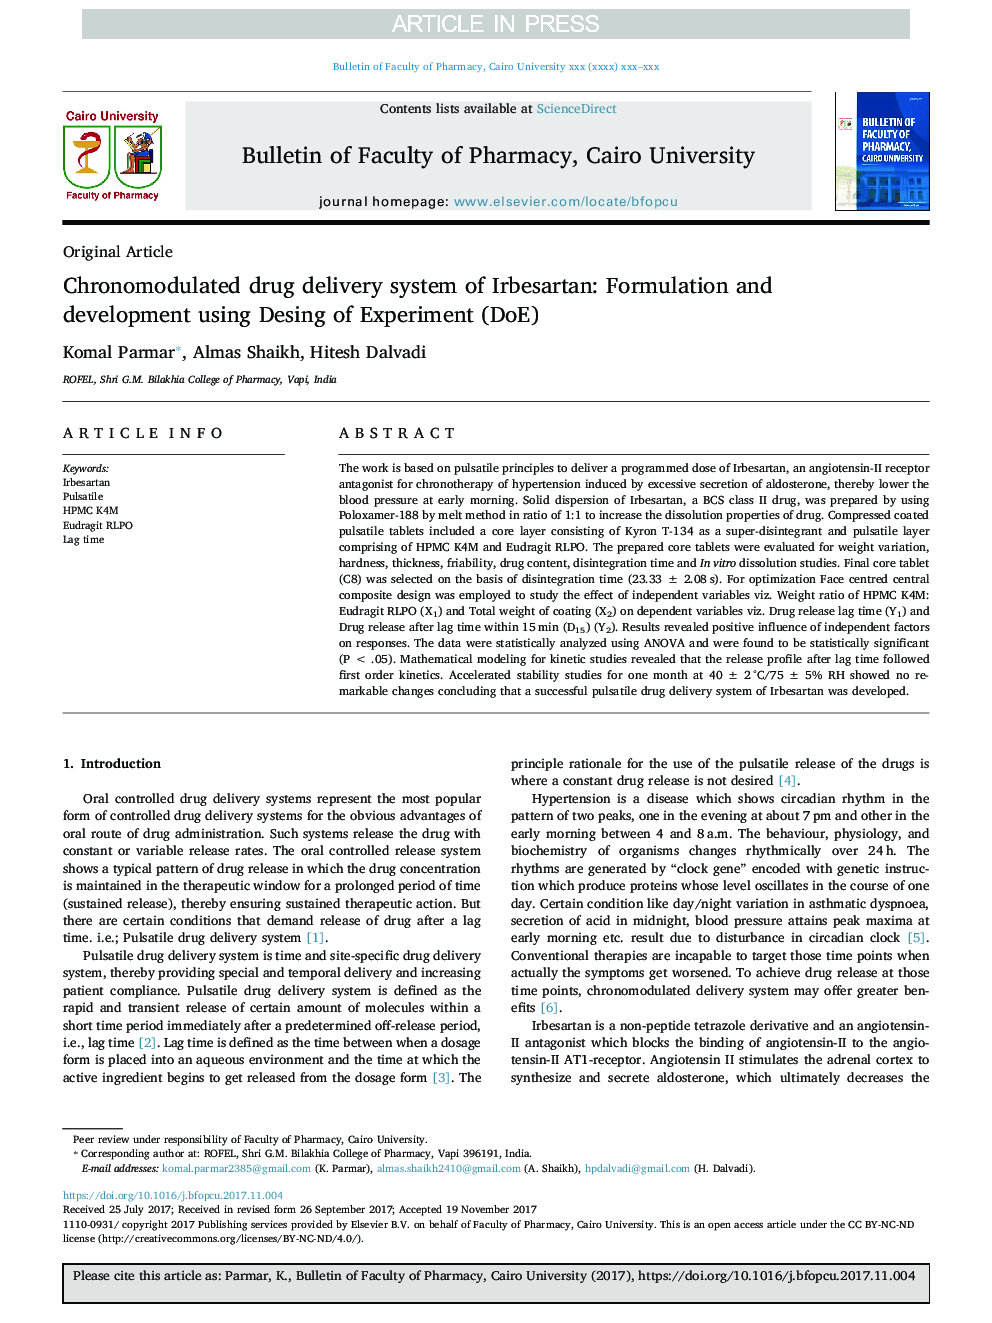 Chronomodulated drug delivery system of Irbesartan: Formulation and development using Desing of Experiment (DoE)